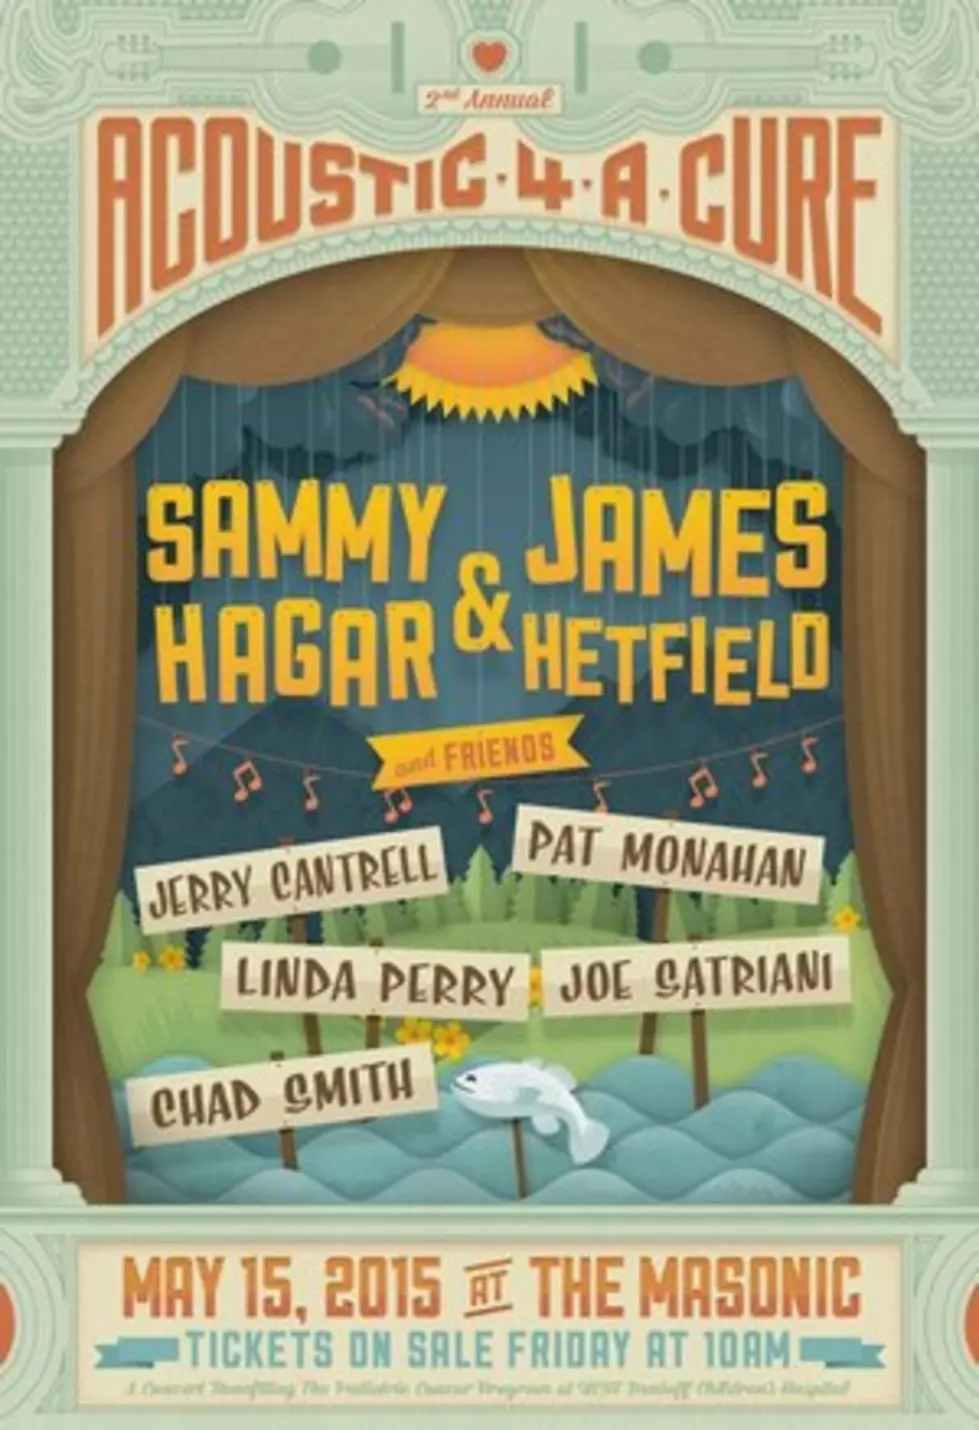 James Hetfield + Sammy Hagar To Headline Acoustic Benefit Show